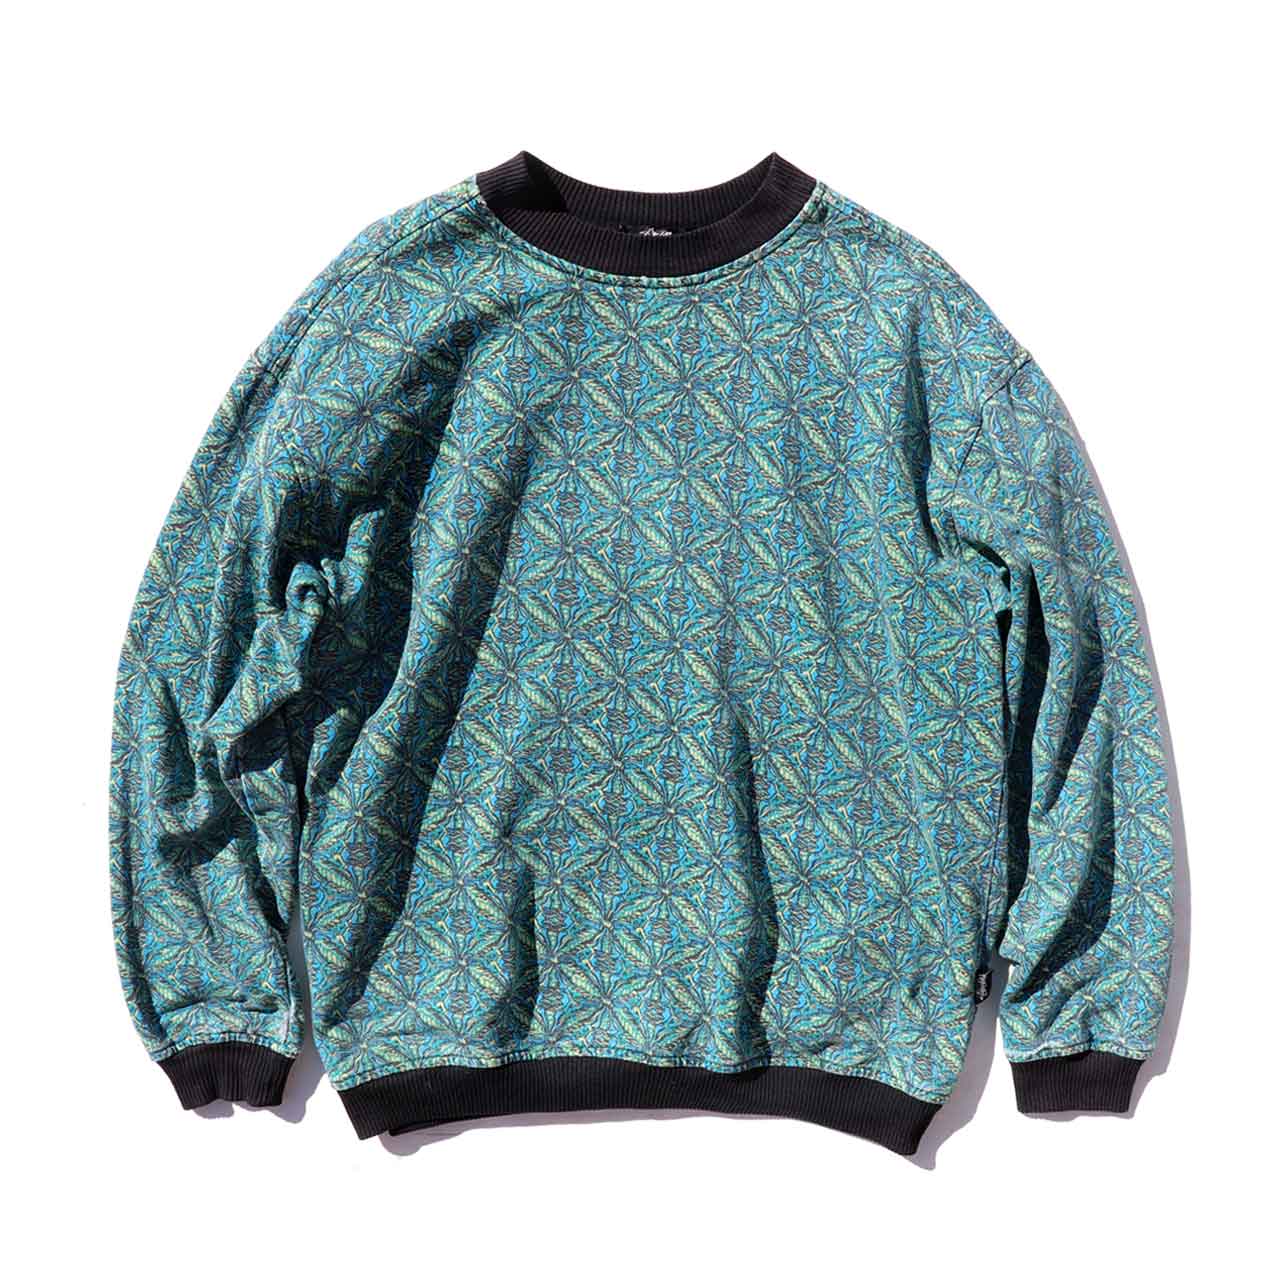 POST JUNK / 80's STUSSY Marijuana Patterned Sweatshirt Made In